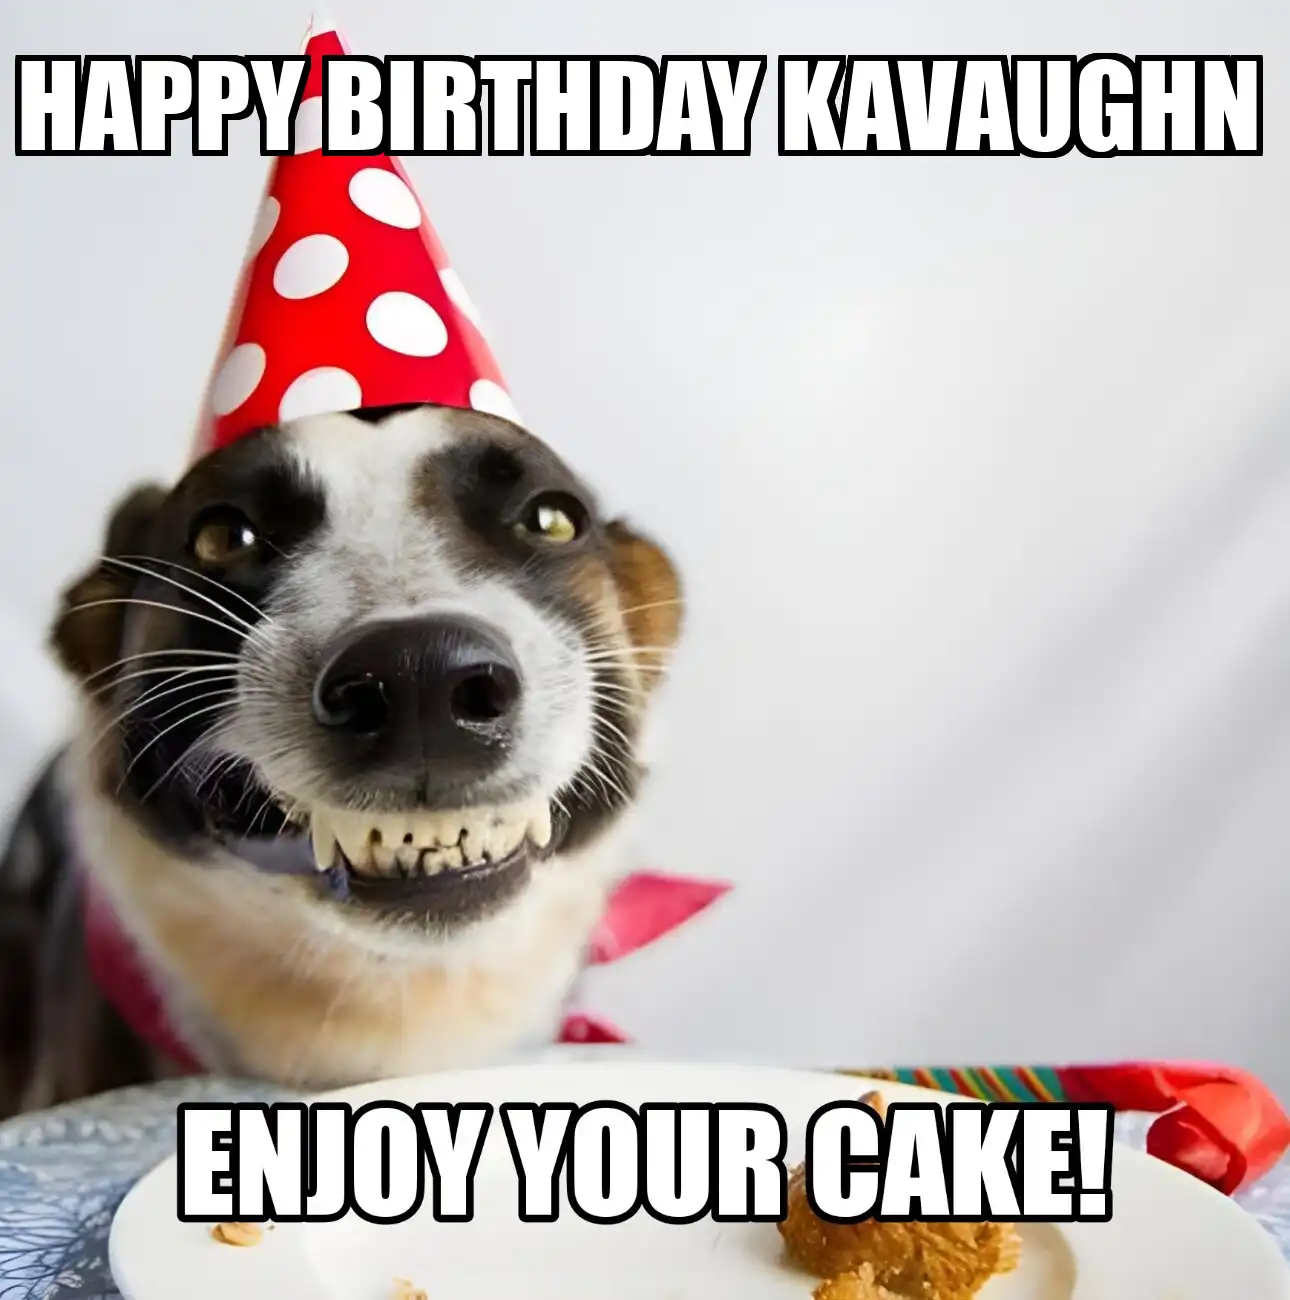 Happy Birthday Kavaughn Enjoy Your Cake Dog Meme